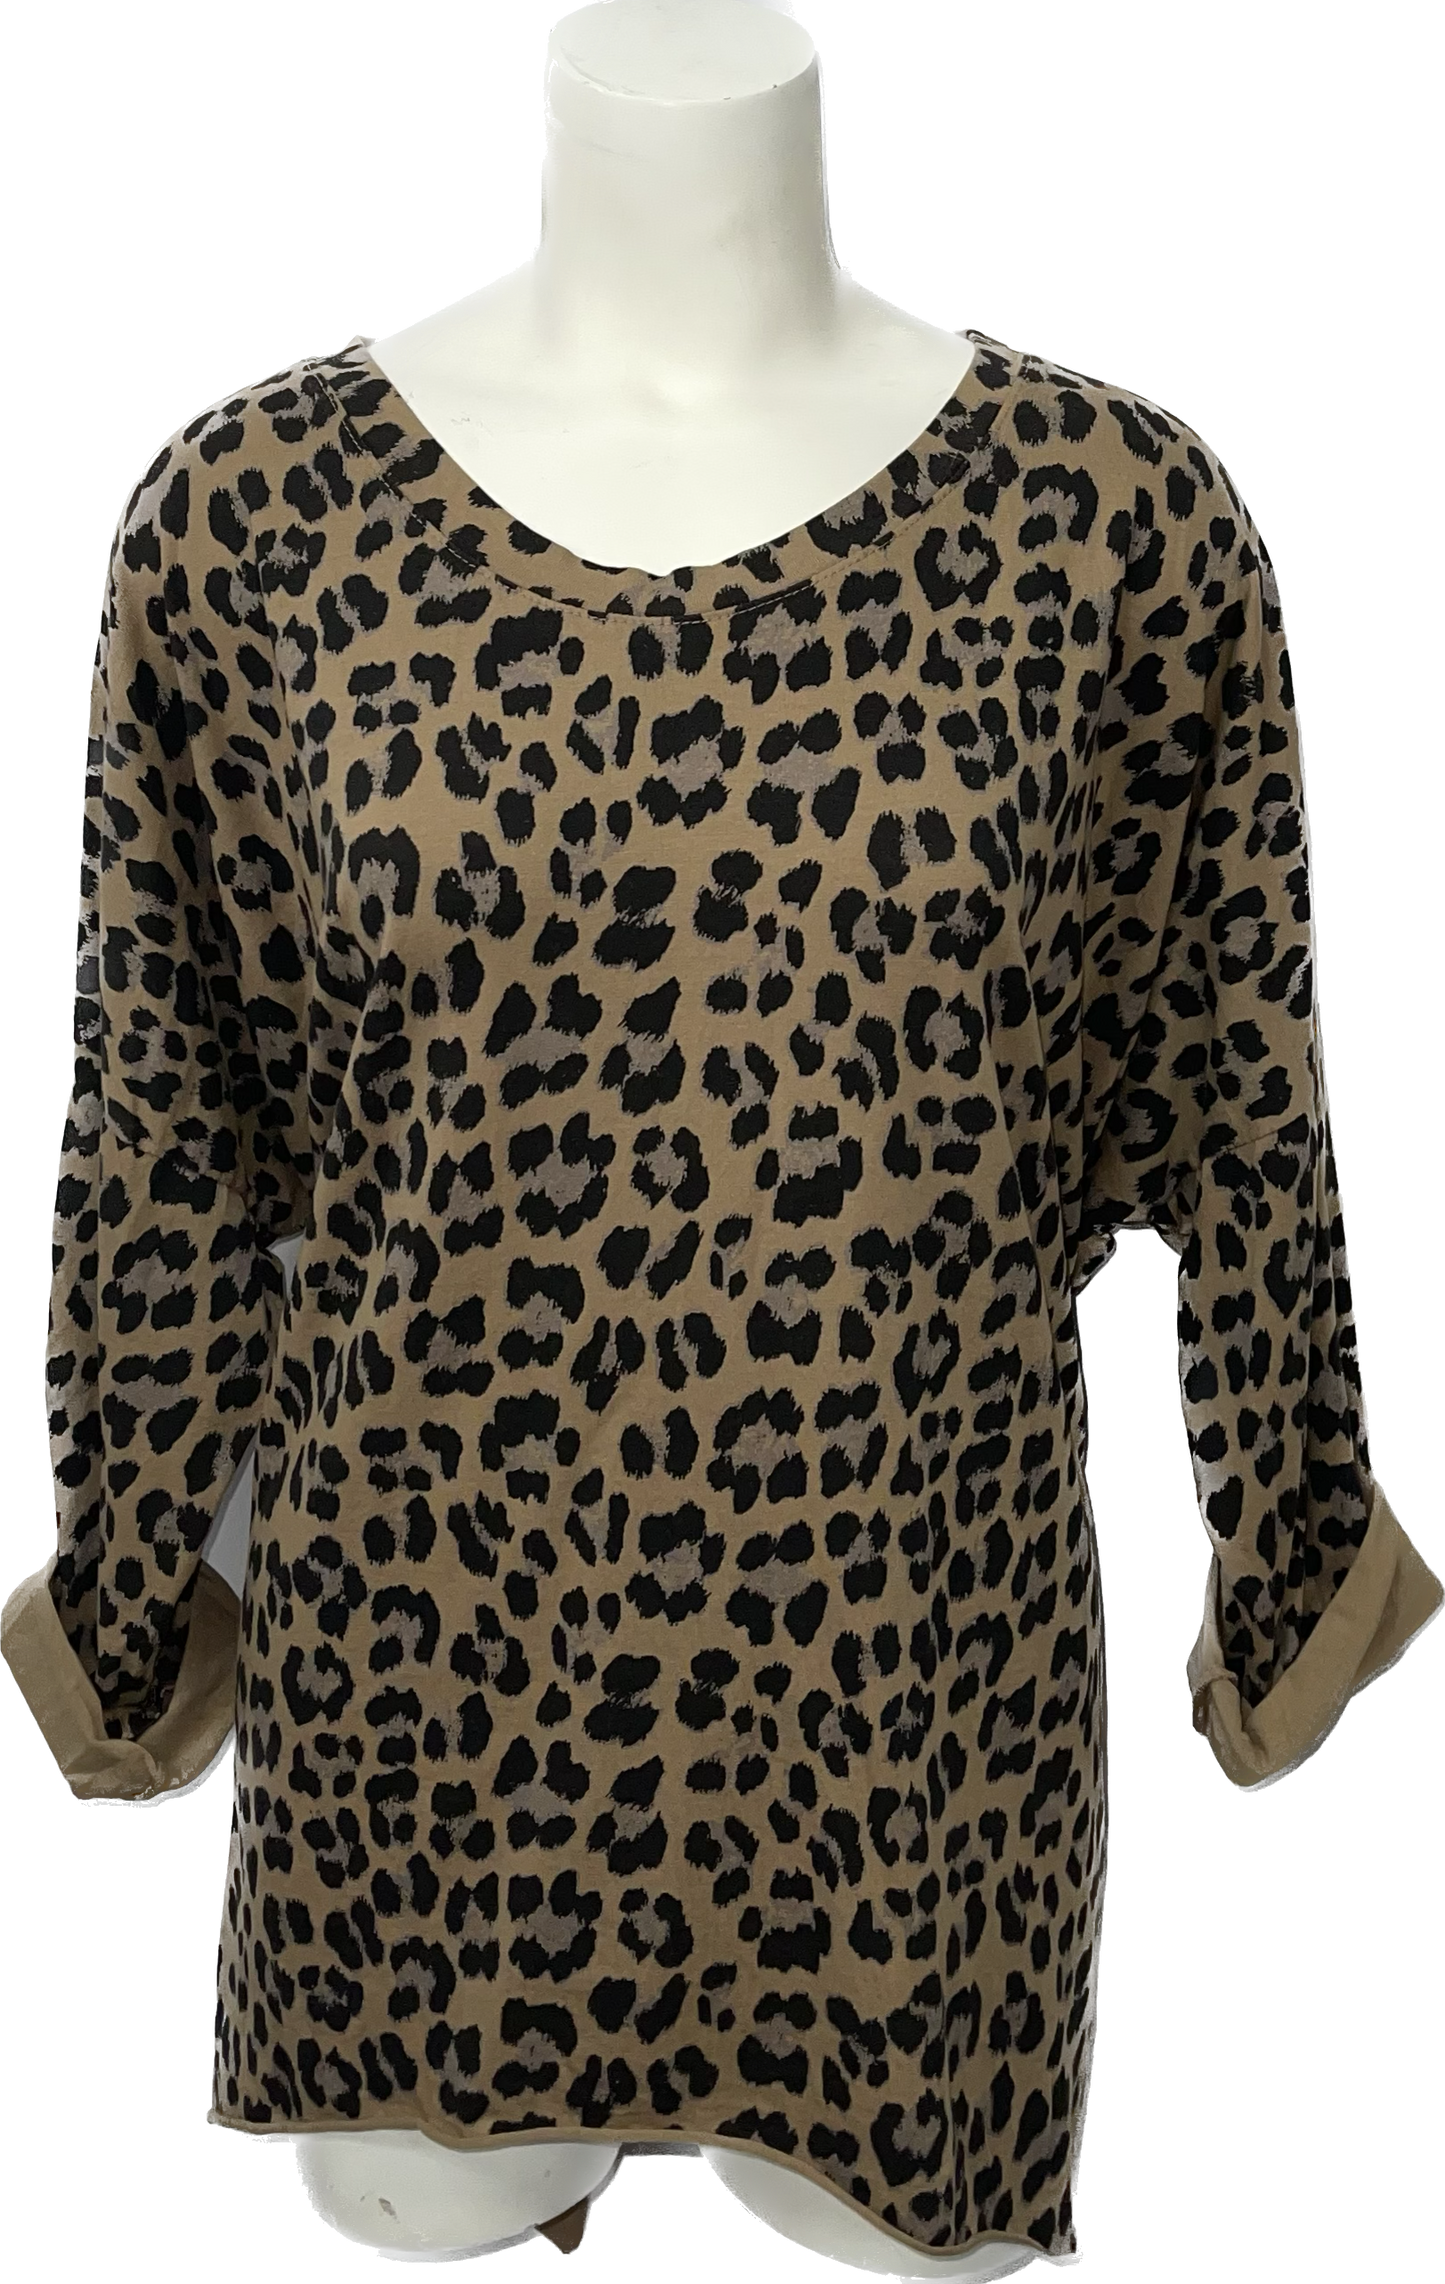 Cheetah Print Tunic